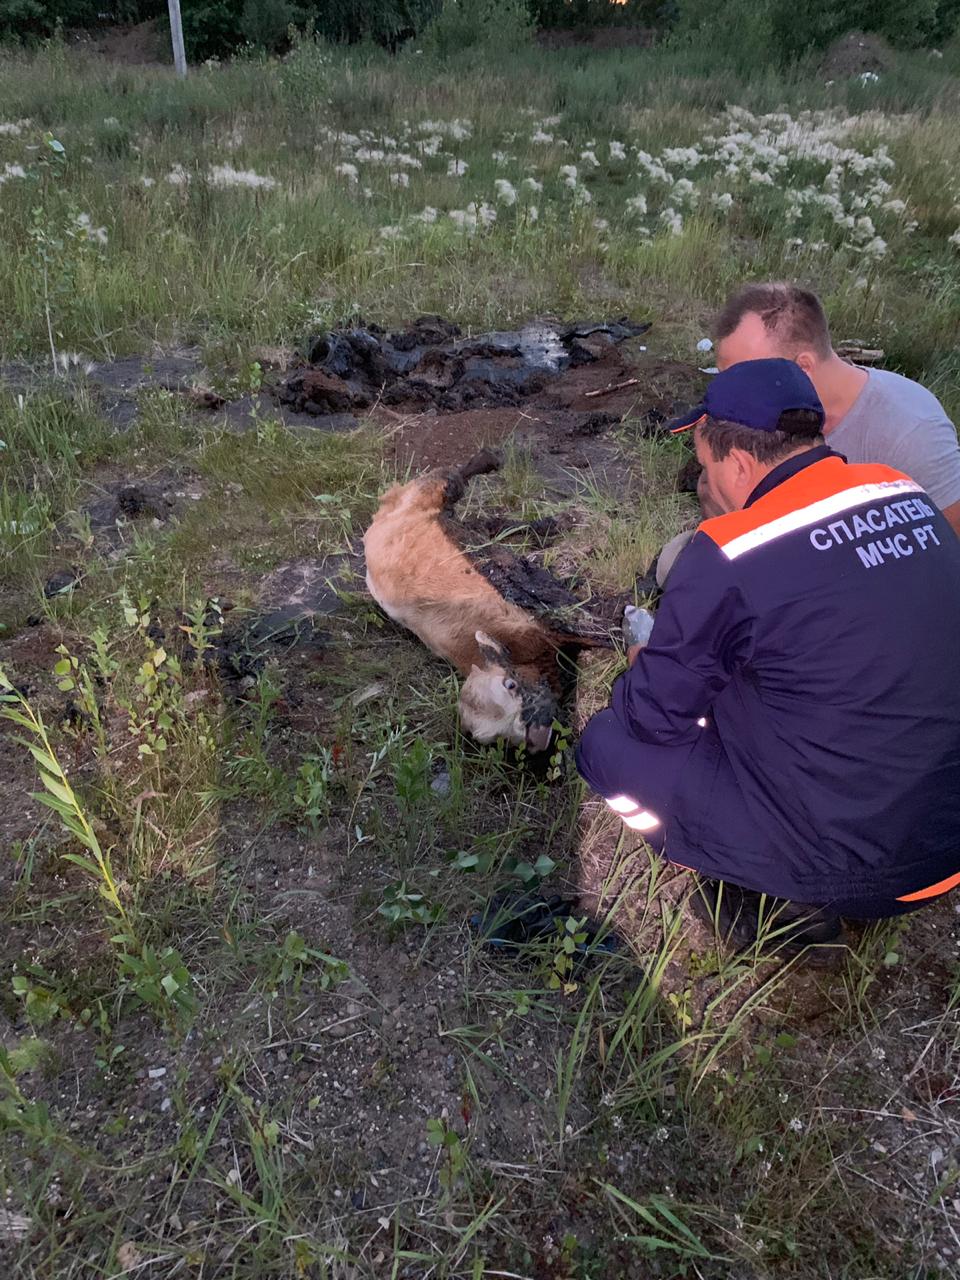 Сотрудники МЧС спасли теленка, который угодил в лужу битума (фото)